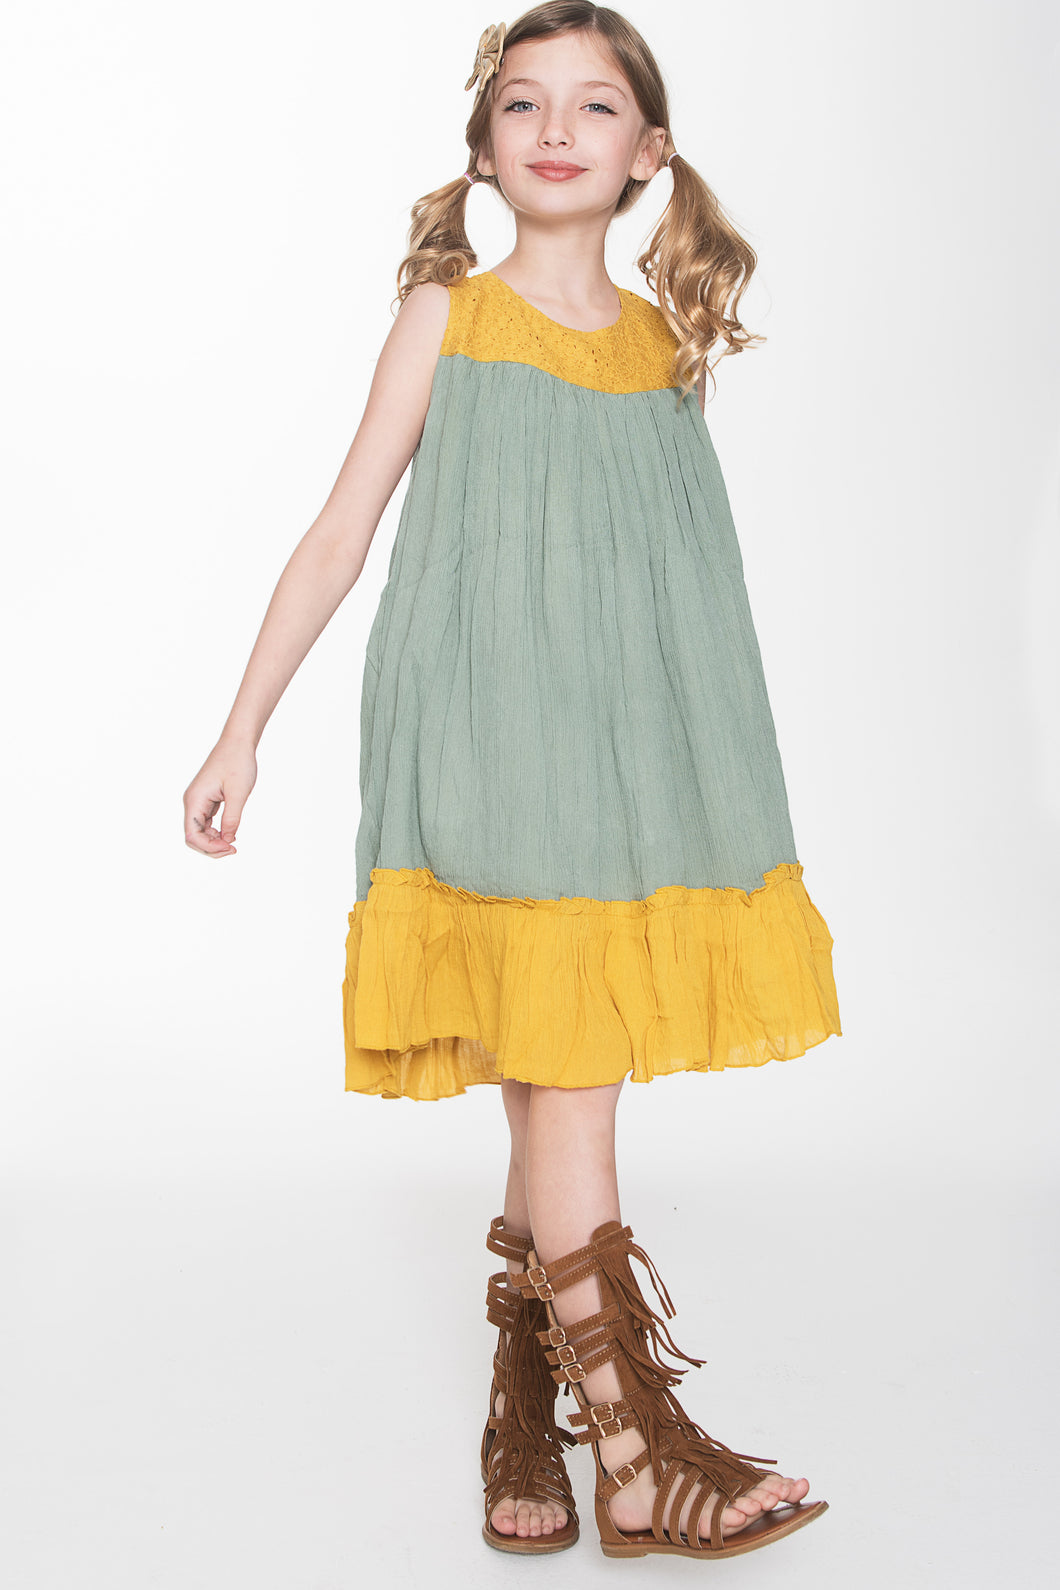 Yellow and Muddy Green Dress - Kids Wholesale Boutique Clothing, Dress - Girls Dresses, Yo Baby Wholesale - Yo Baby